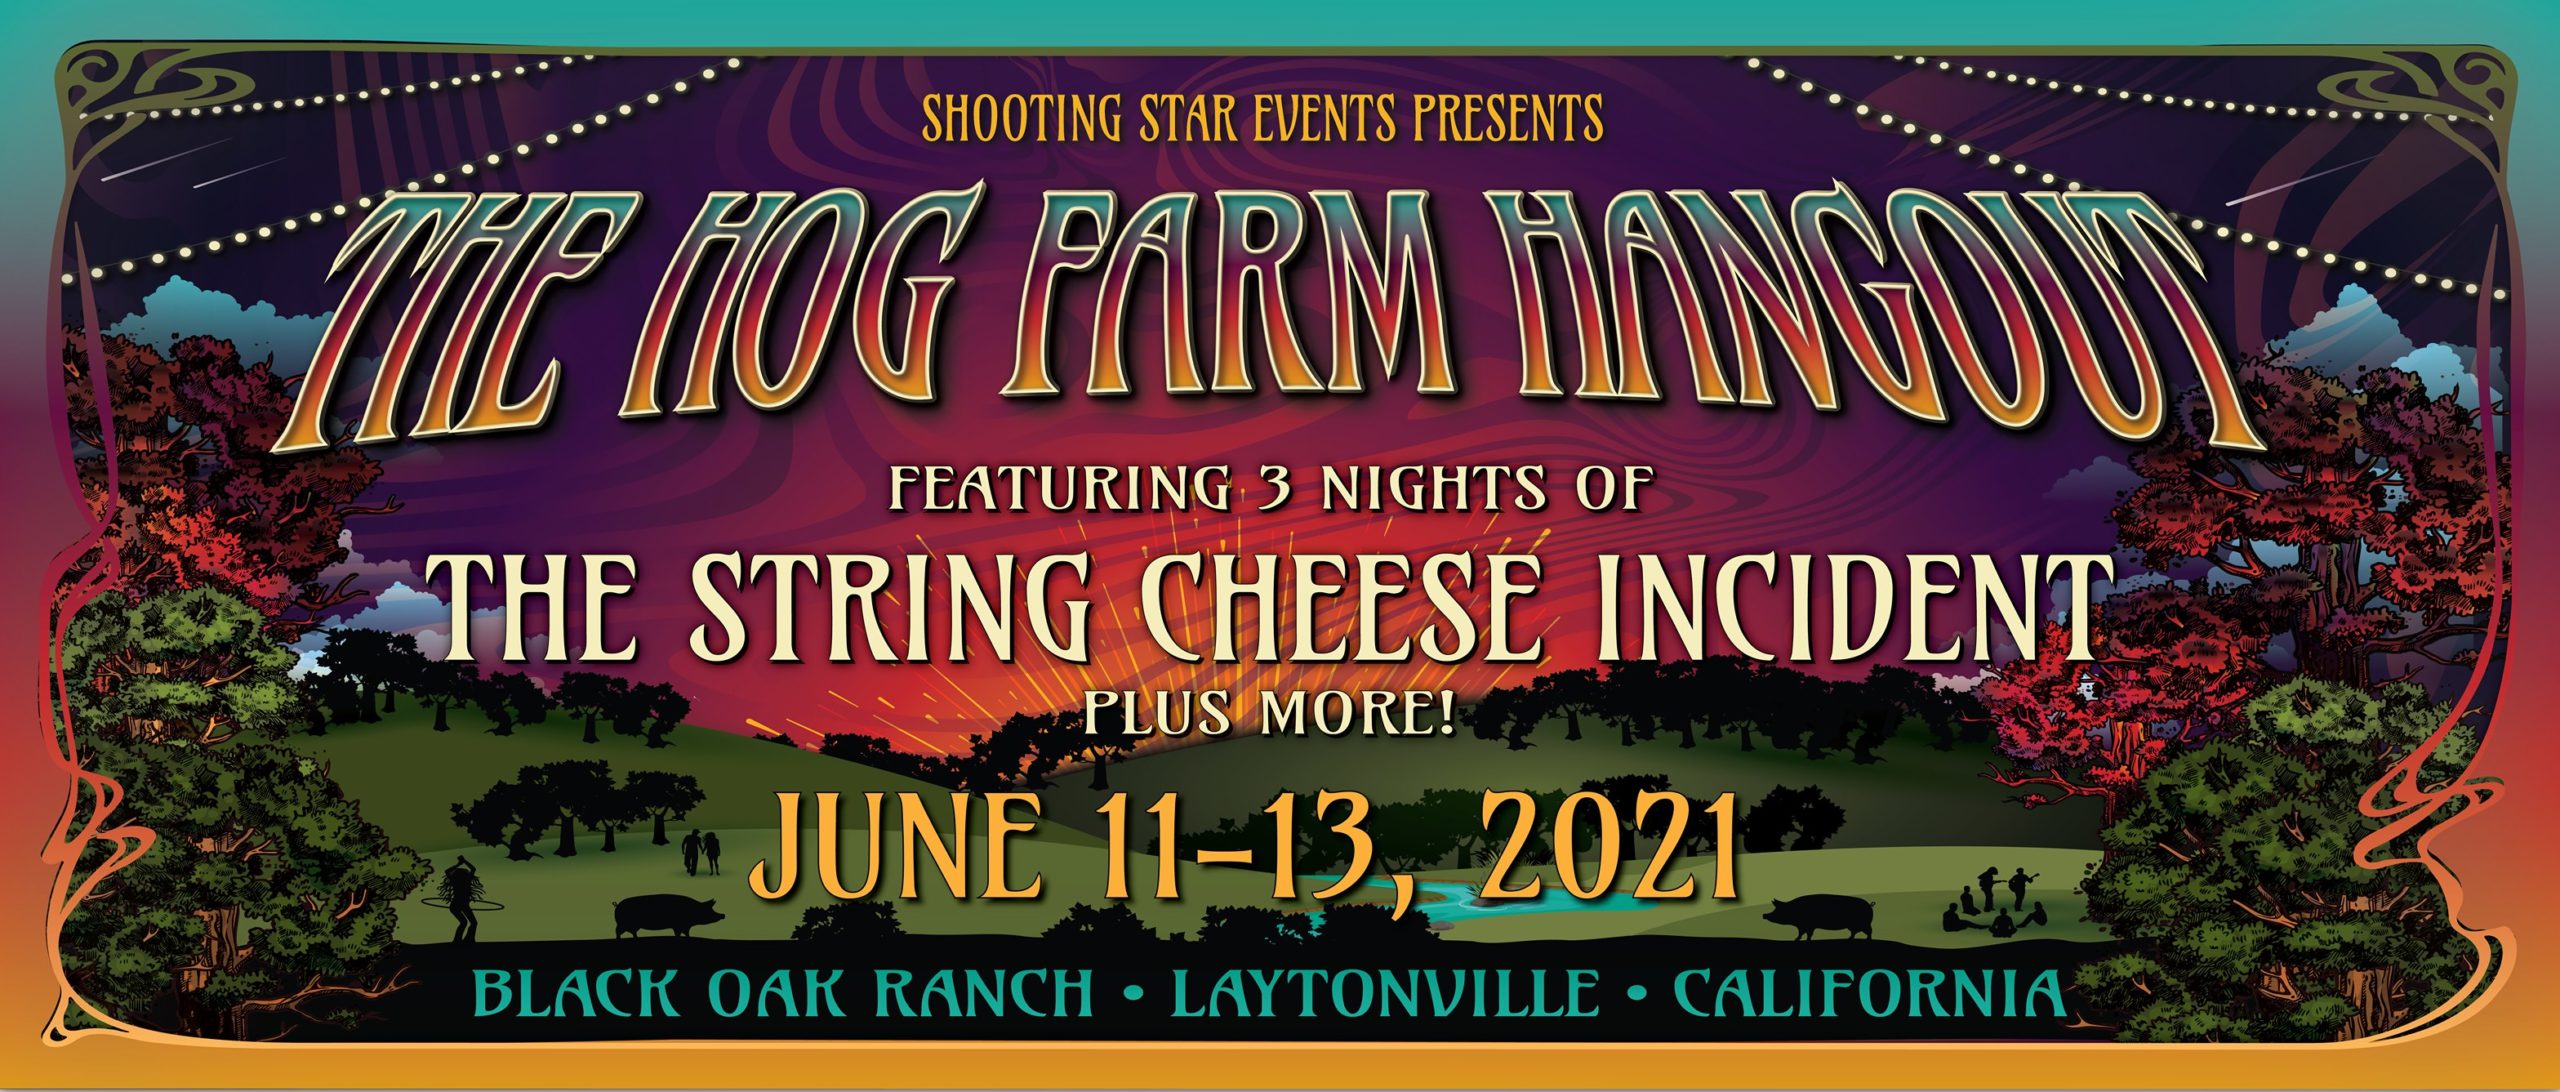 6/11/21 The Hog Farm Hangout, Black Oak Ranch, Laytonville CA